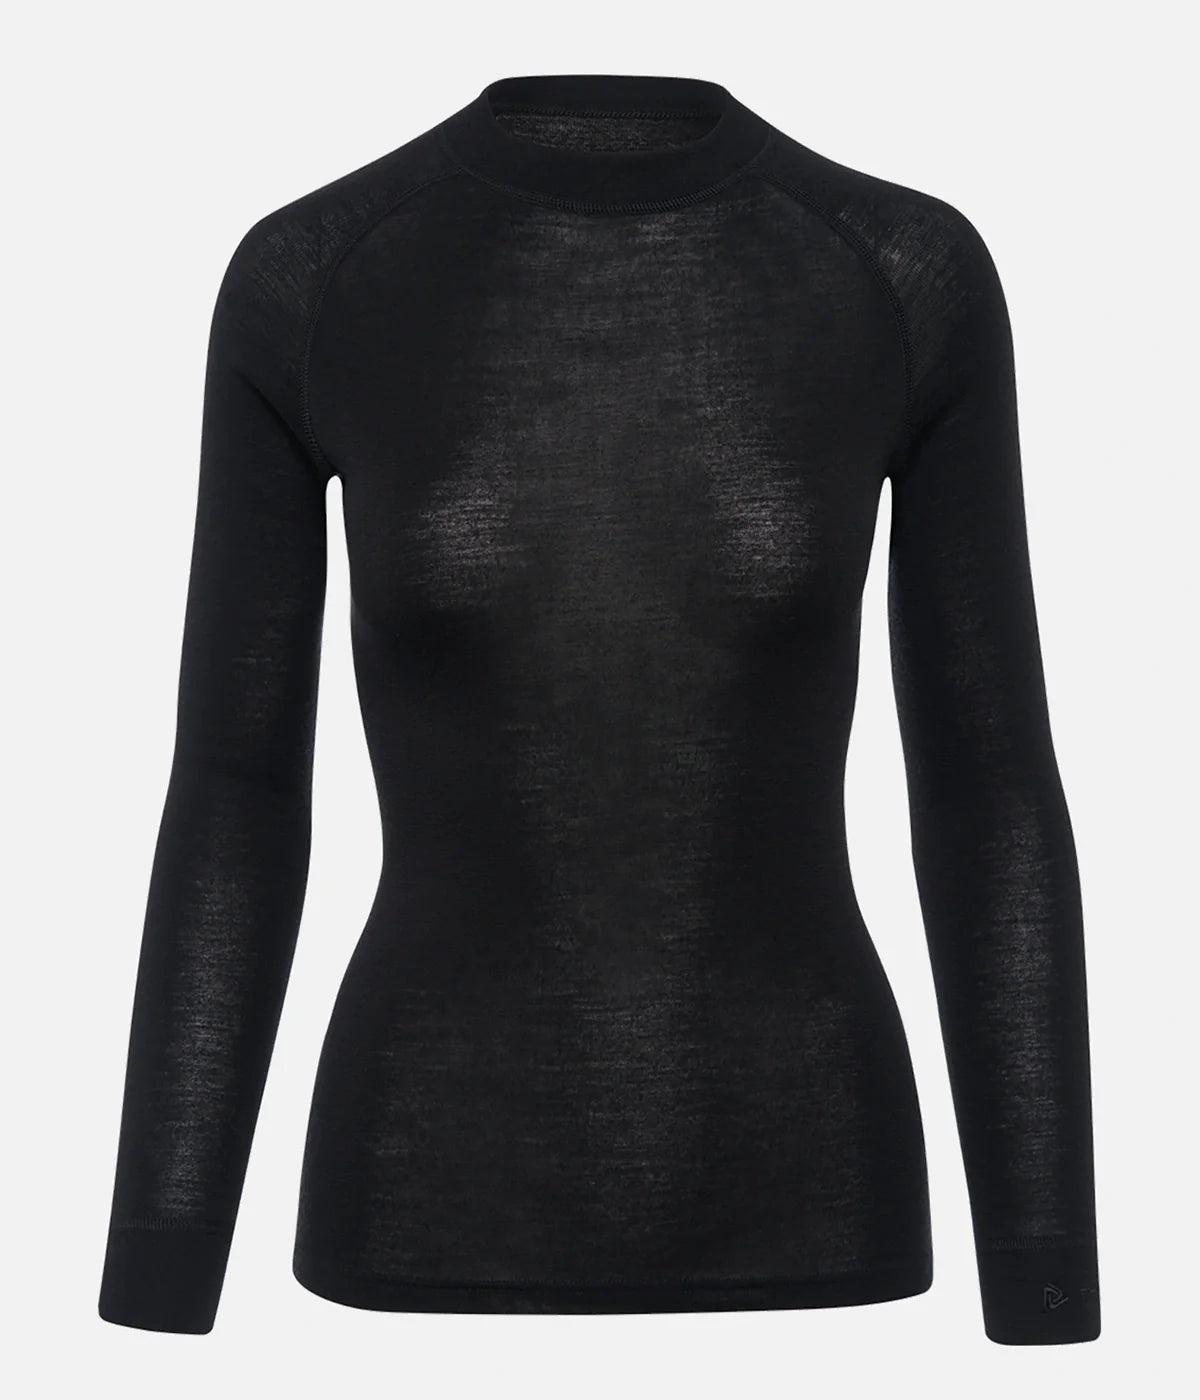 SSLR-Thermal-Shirts for-Women-Turtleneck Long Sleeve Tops Fleece